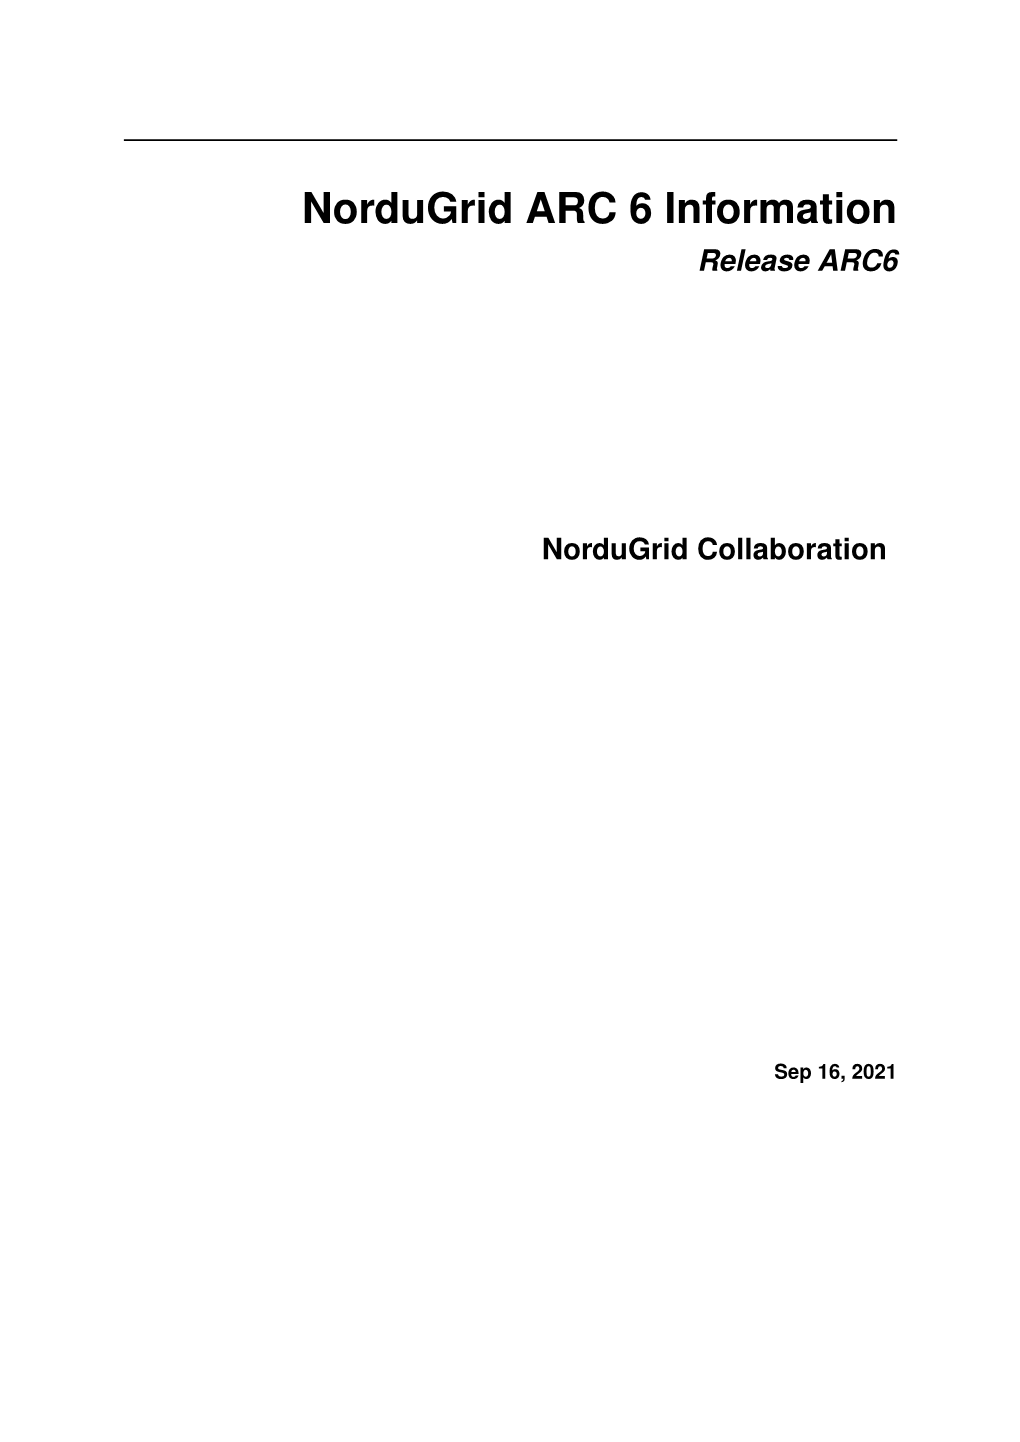 Nordugrid ARC 6 Information Release ARC6